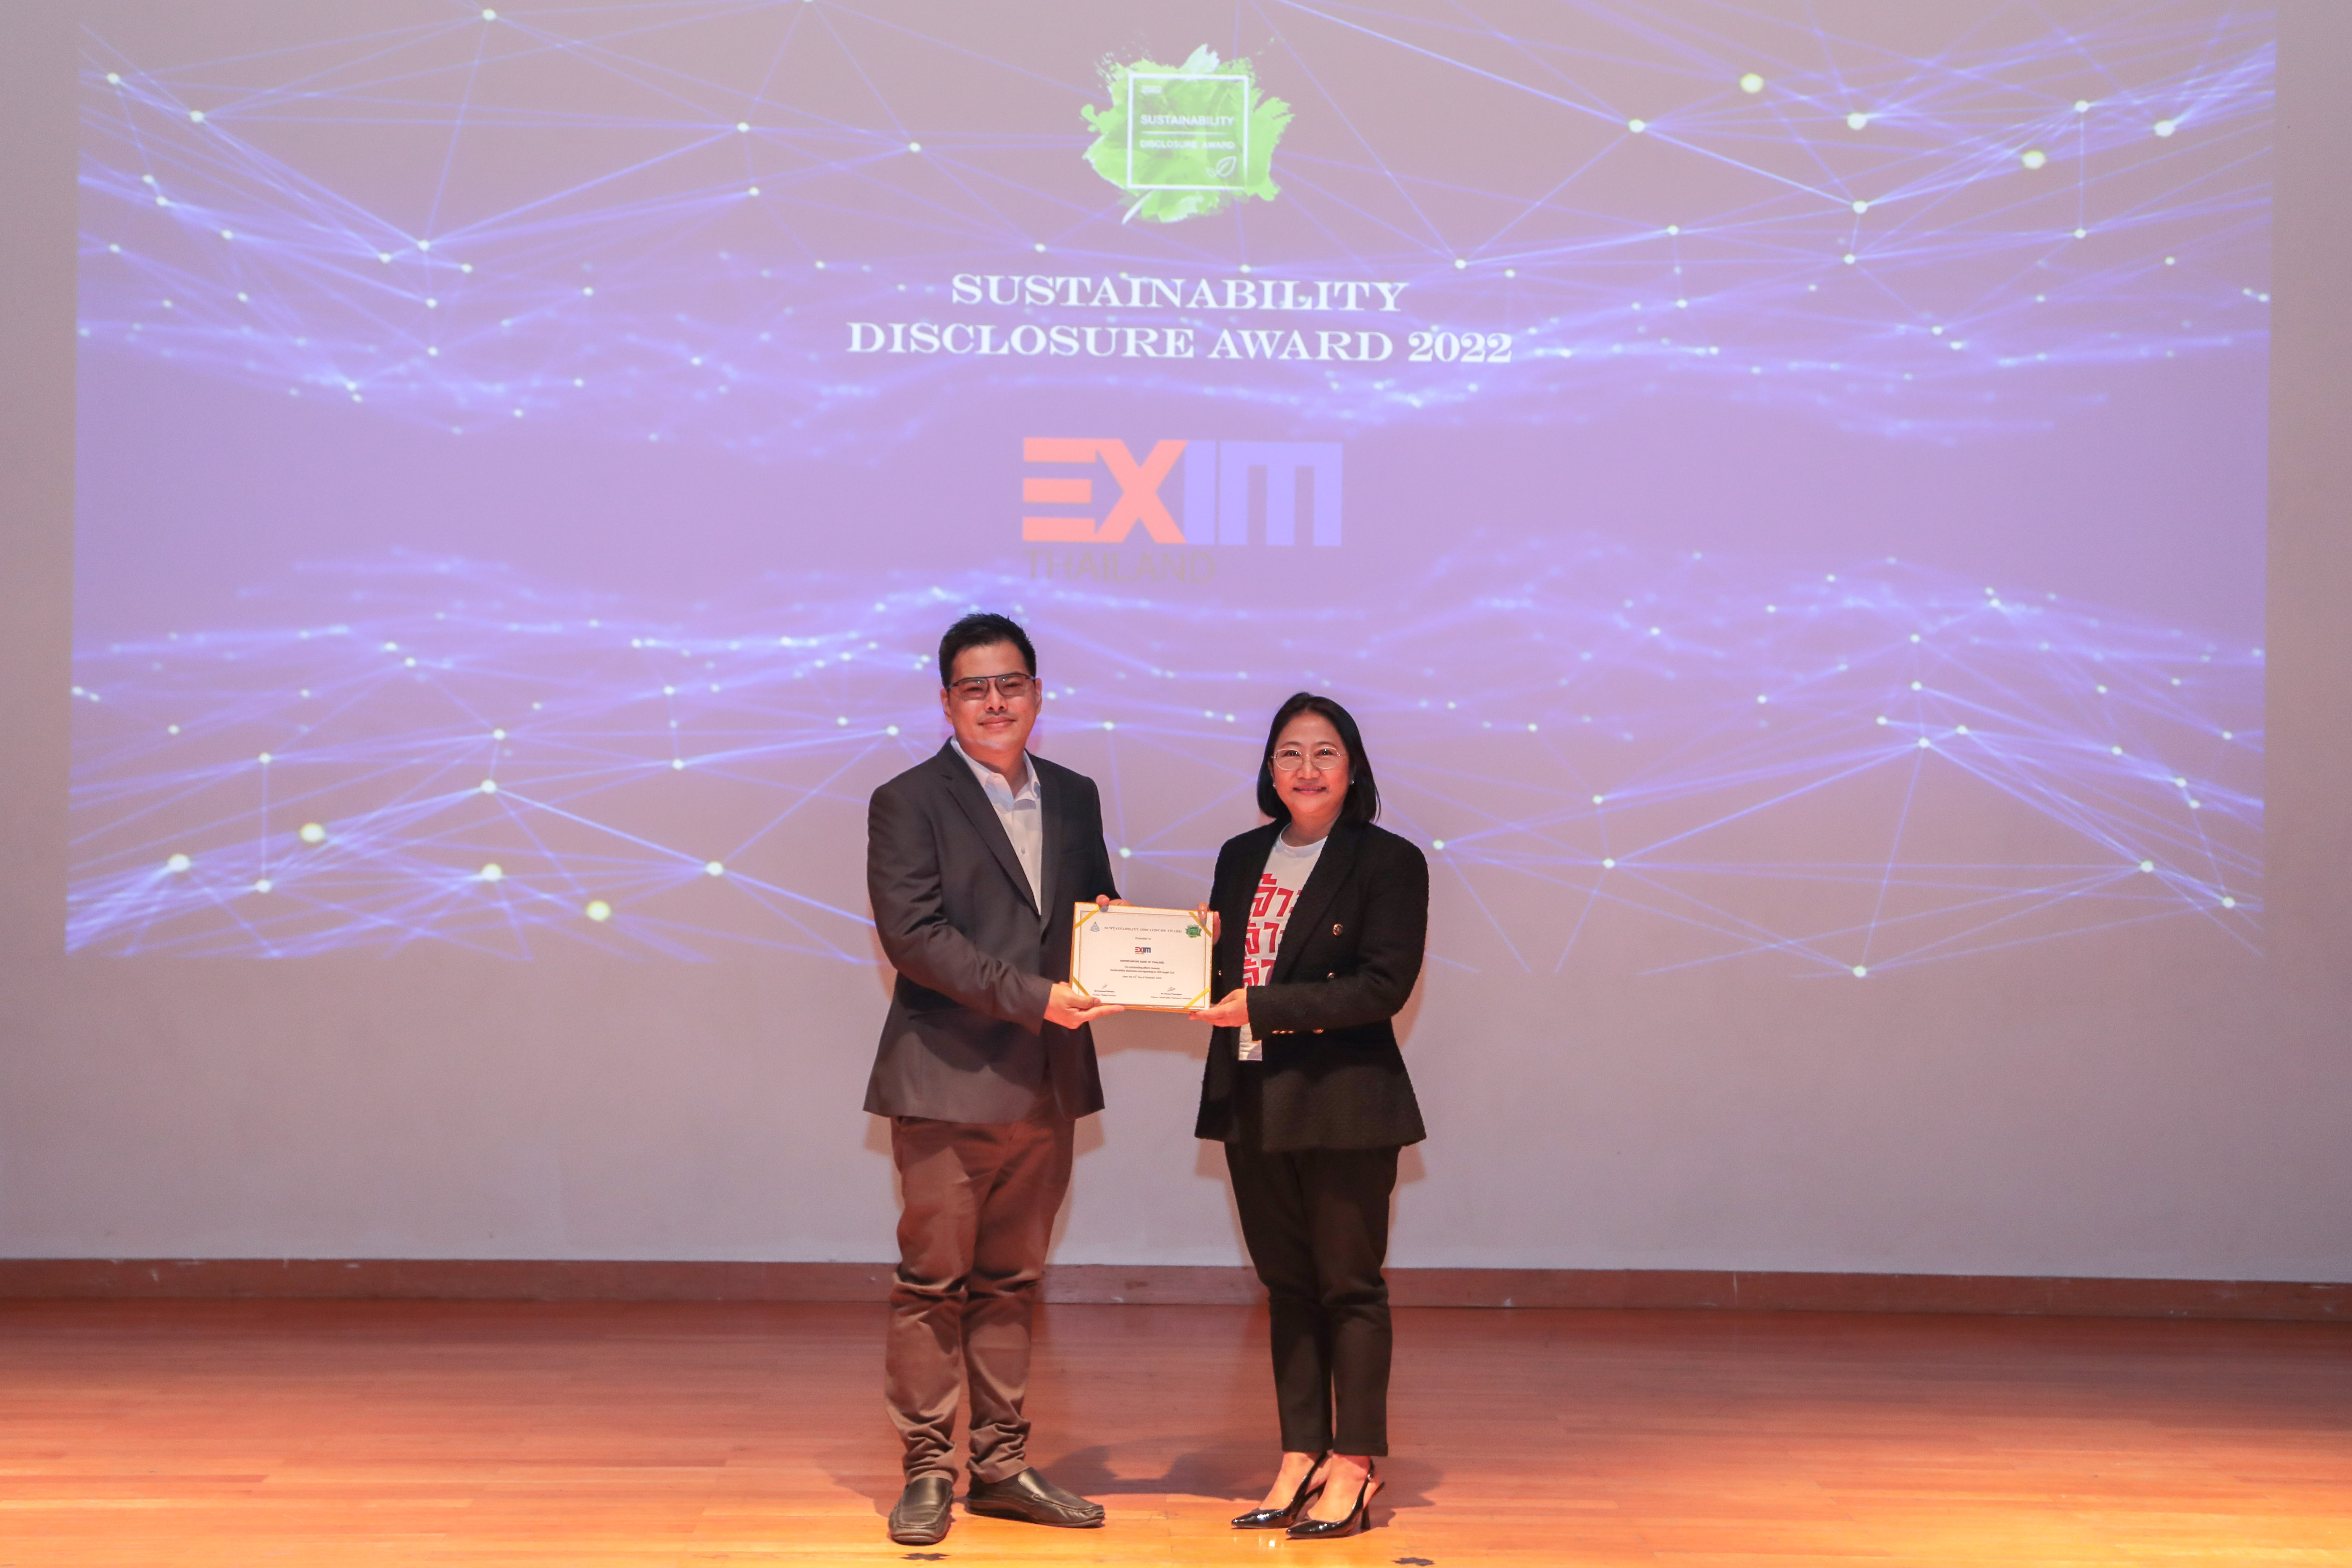 EXIM Thailand Received Sustainability Disclosure Award 2022